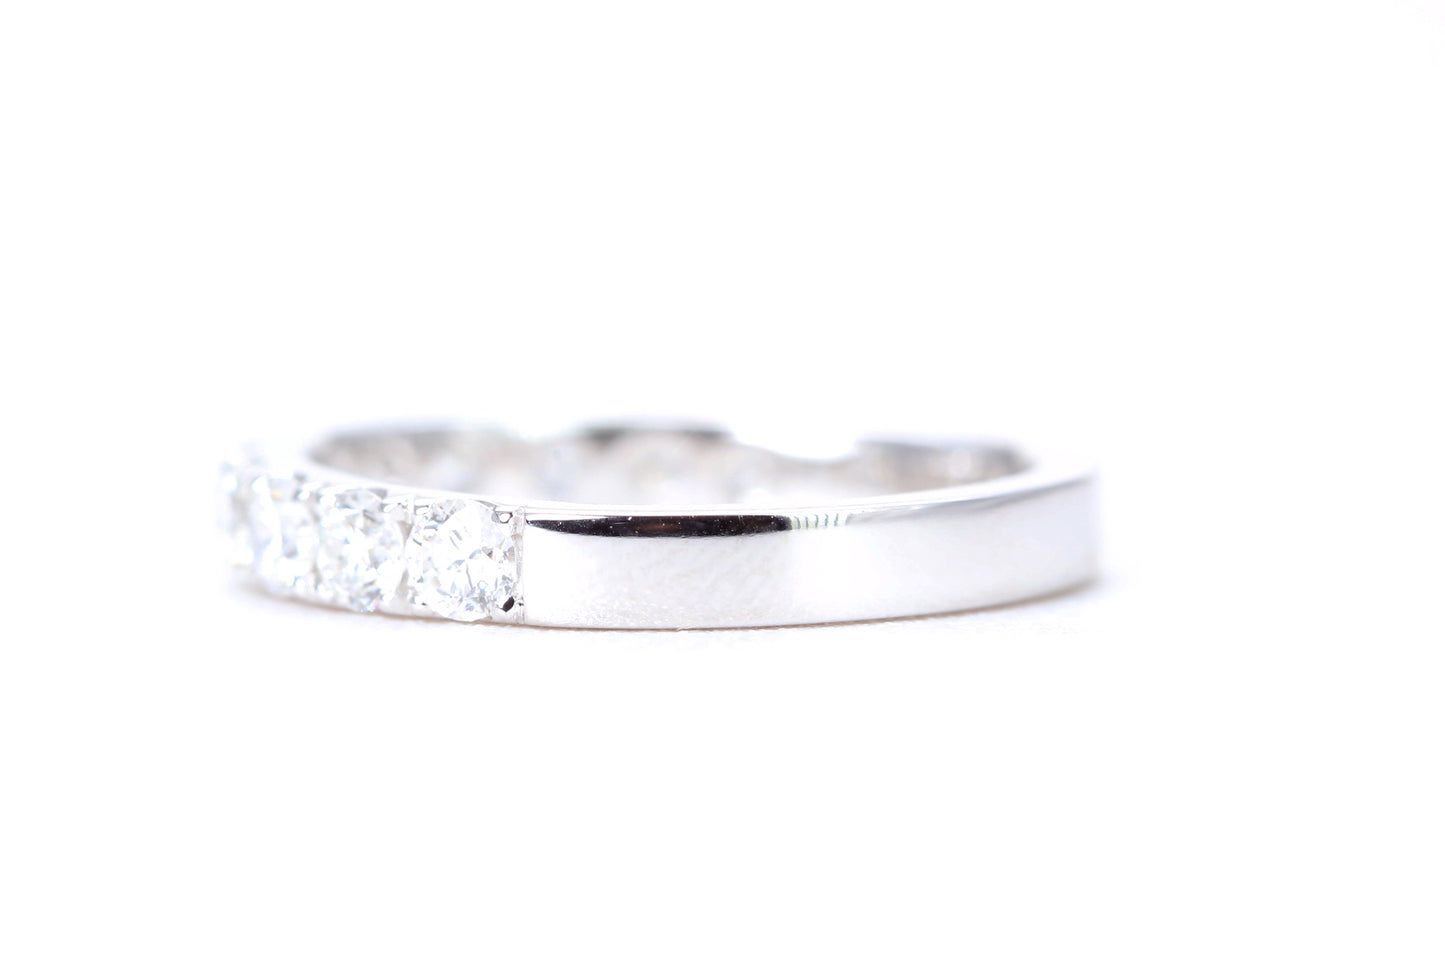 Micro Pavé One Carat Diamond Ring in 14K White Gold